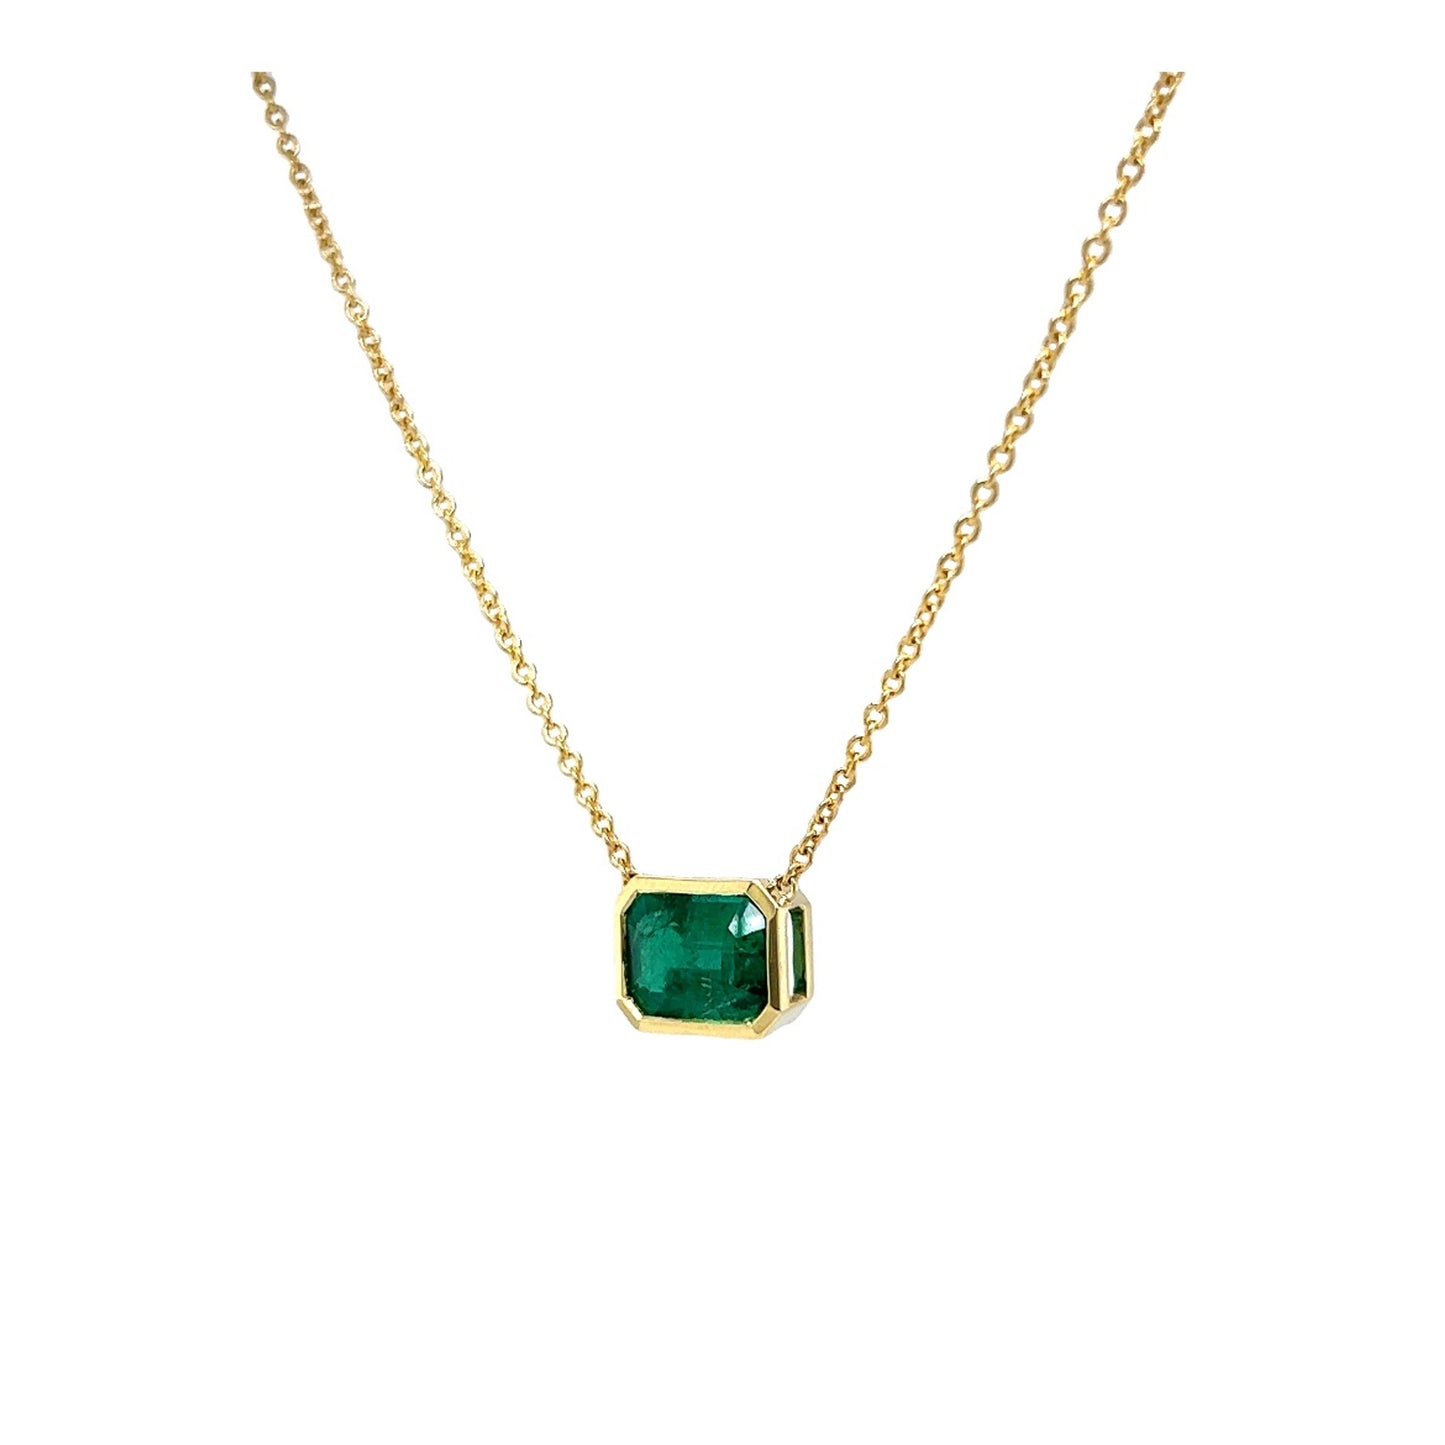 2.03 Emerald Cut Emerald Pendant in 18k Yellow Gold